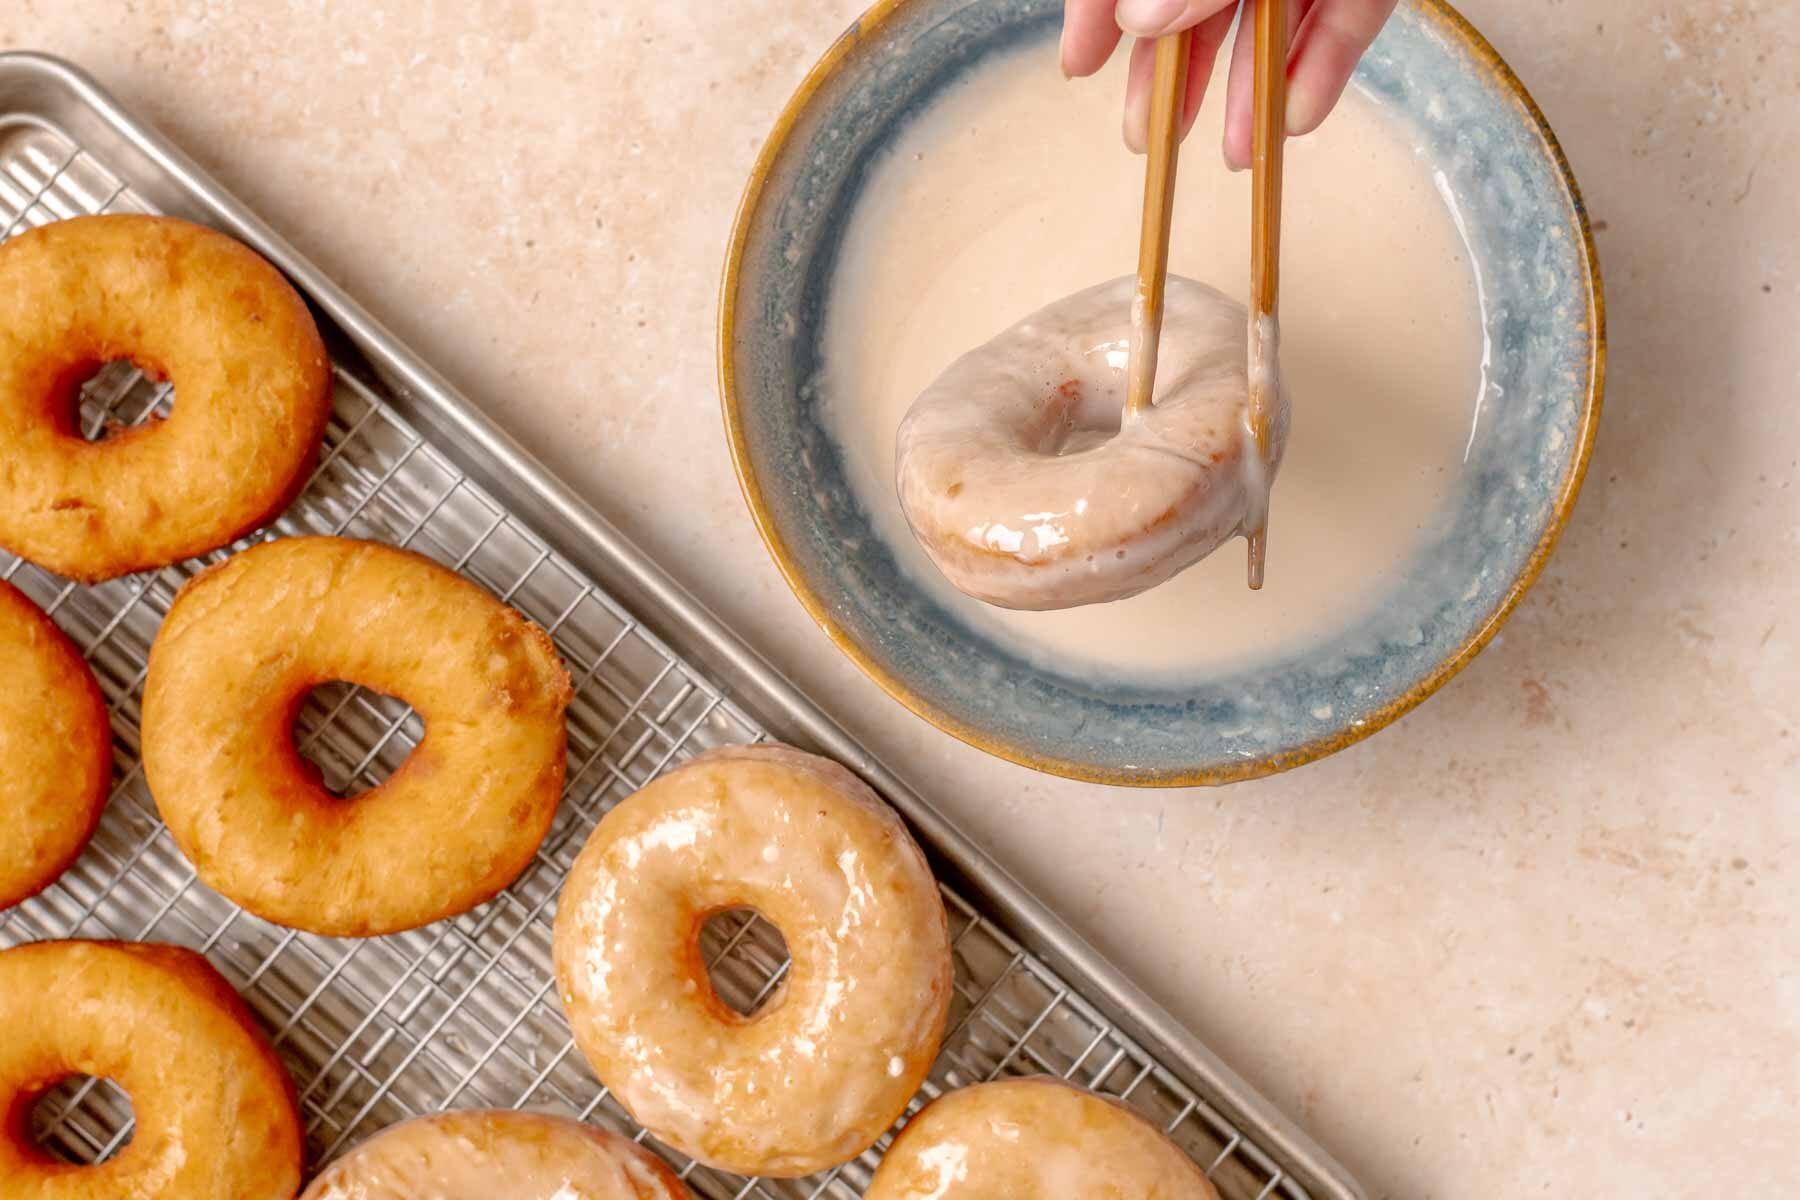 Glazed Potato Donuts dipping donut in glaze with chop sticks, glazed and unglazed donuts on baking sheet.